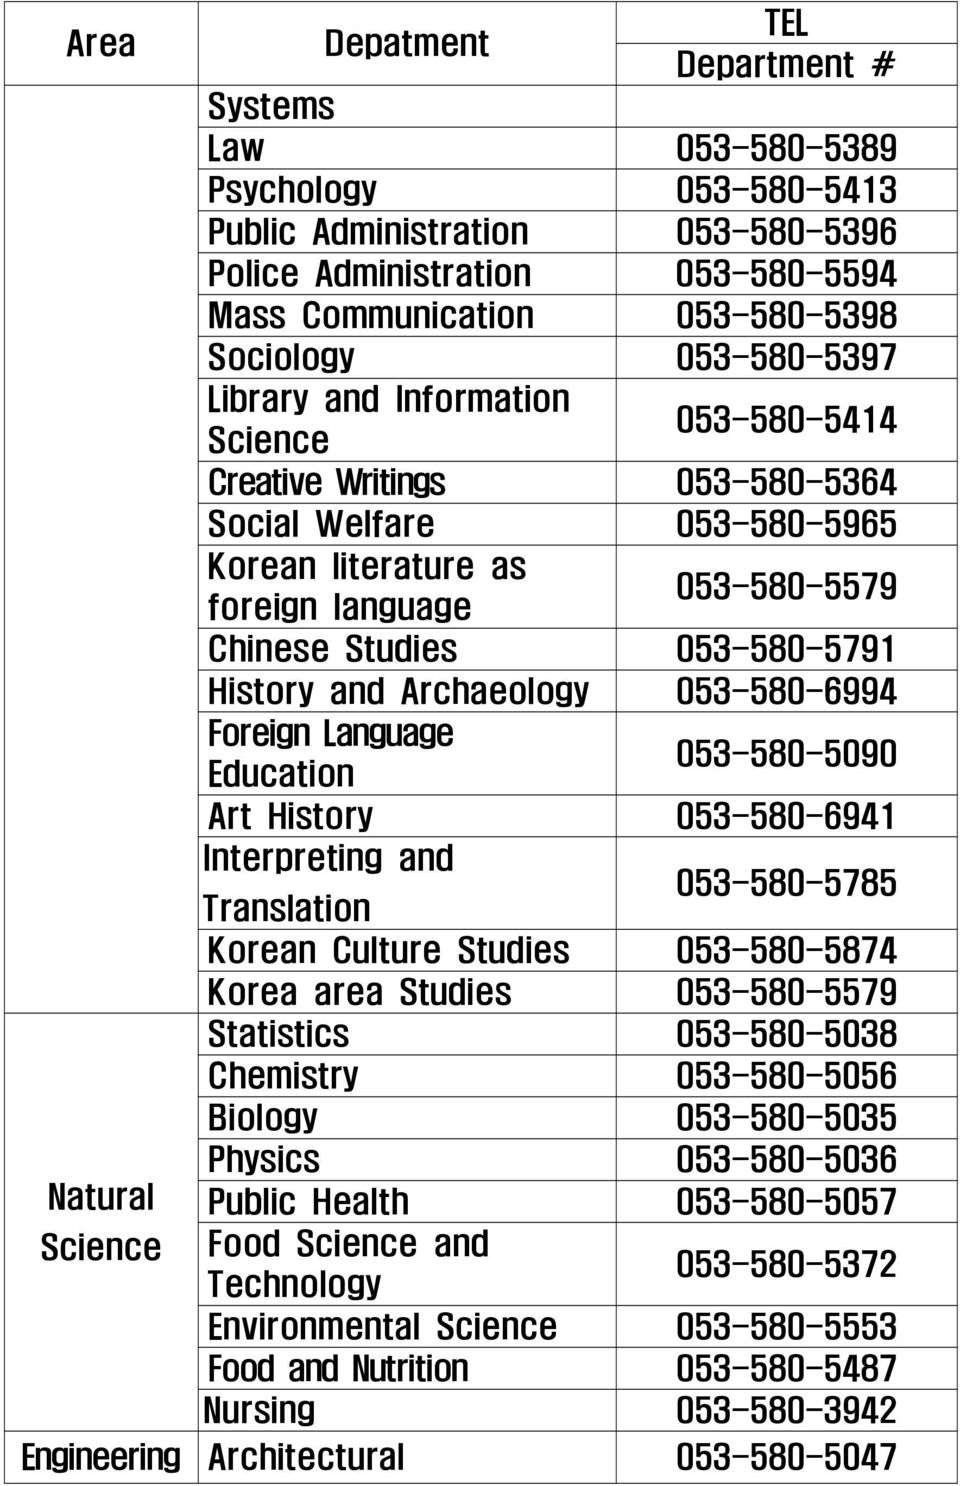 History and Archaeology 053-580-6994 Foreign Language Education 053-580-5090 Art History 053-580-6941 Interpreting and Translation 053-580-5785 Korean Culture Studies 053-580-5874 Korea area Studies